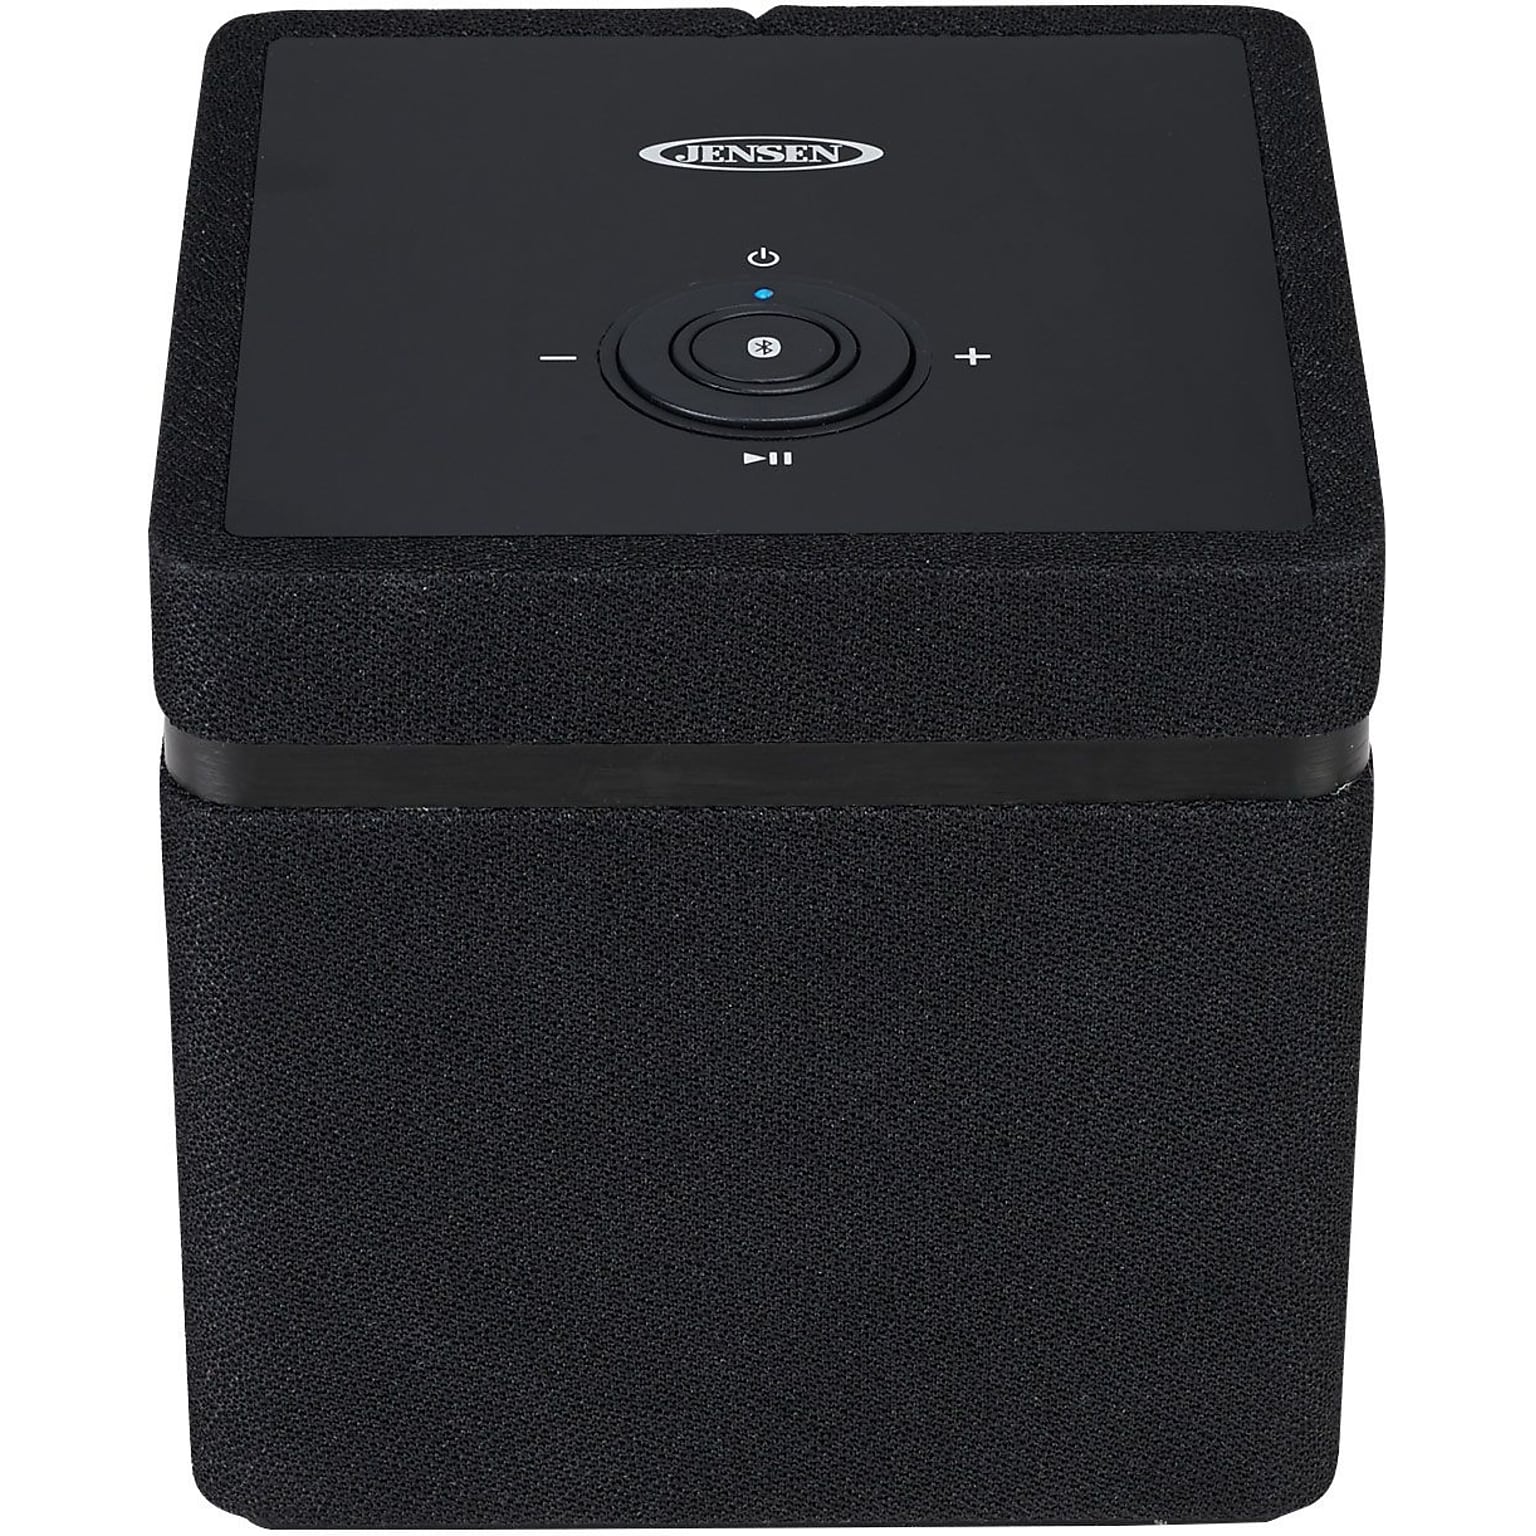 Jensen J1S-1000 Bluetooth Wi-Fi Wireless Stereo Smart Speaker with Chromecast